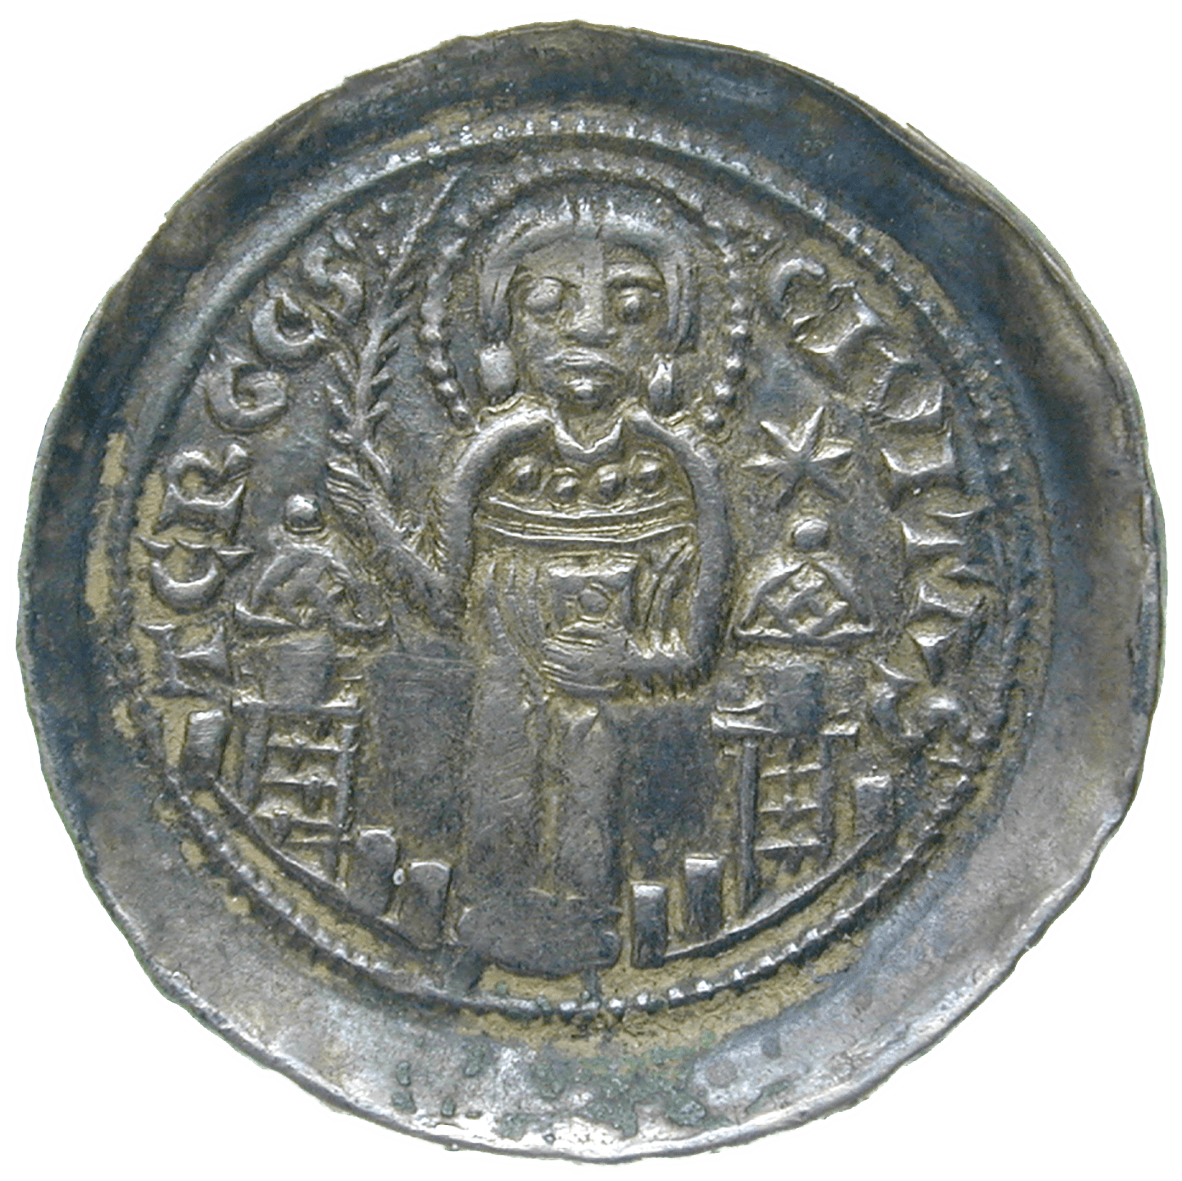 Holy Roman Empire, City of Trieste, Bishop Volrico de Portis, Denarius (reverse)